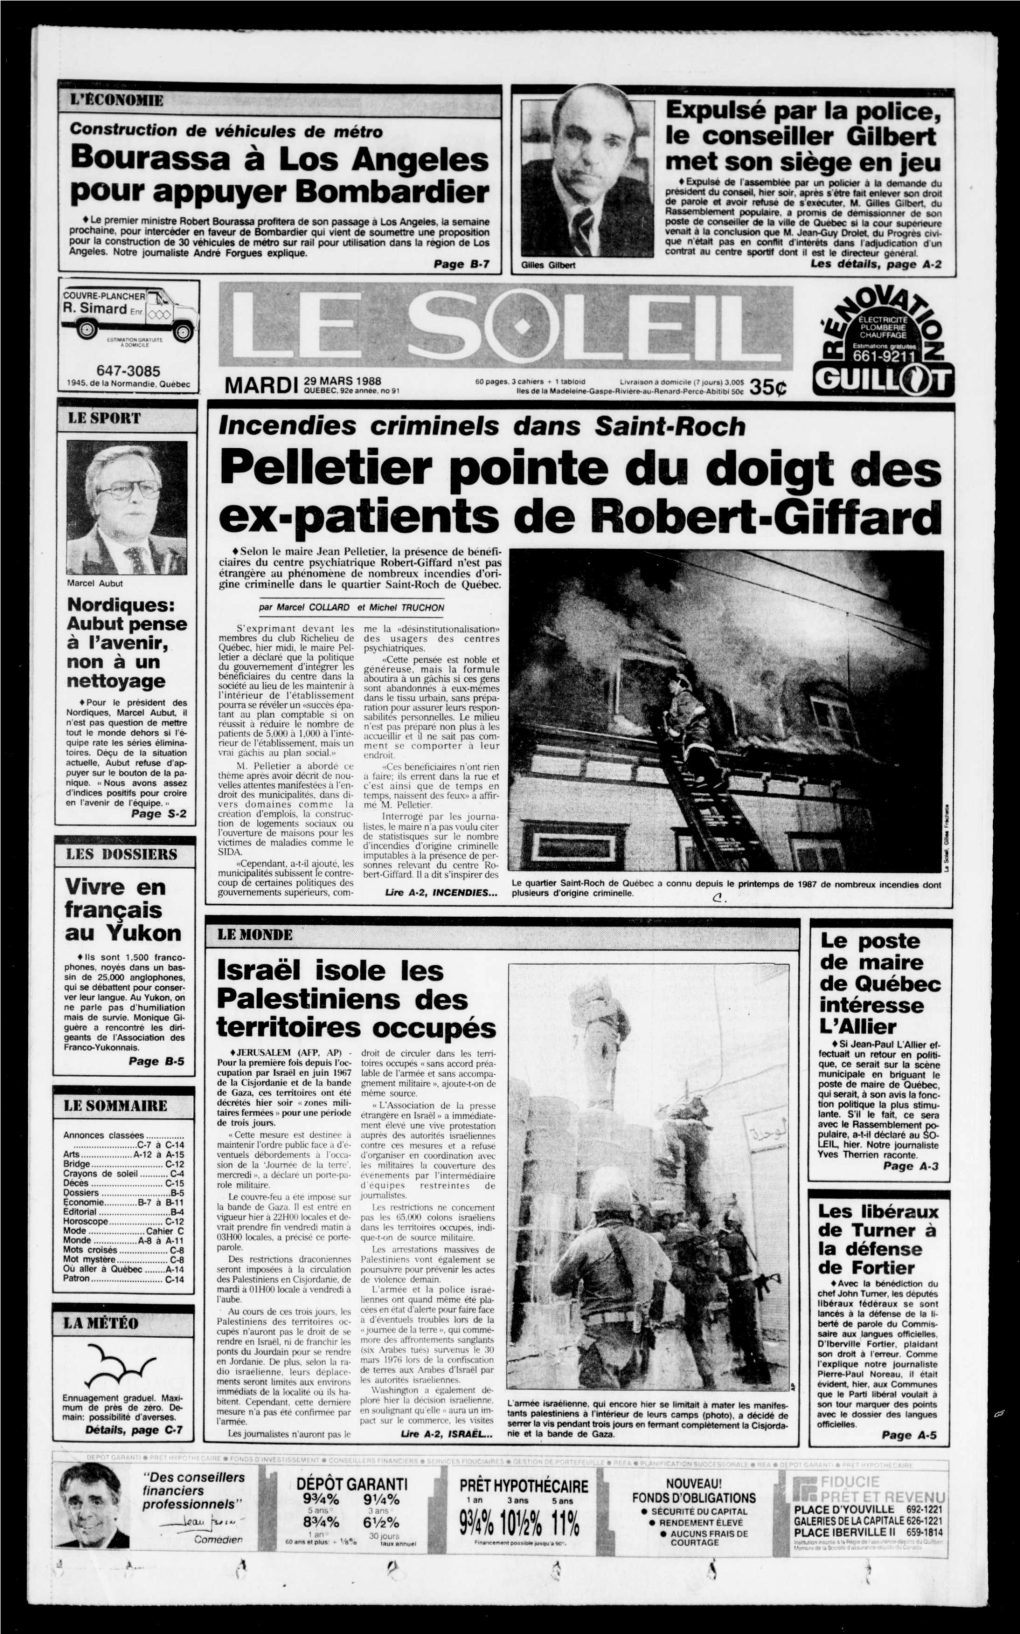 Pelletier Pointe Du Doigt Des Ex-Patients De Robeit-Giffard Mlo'tt In